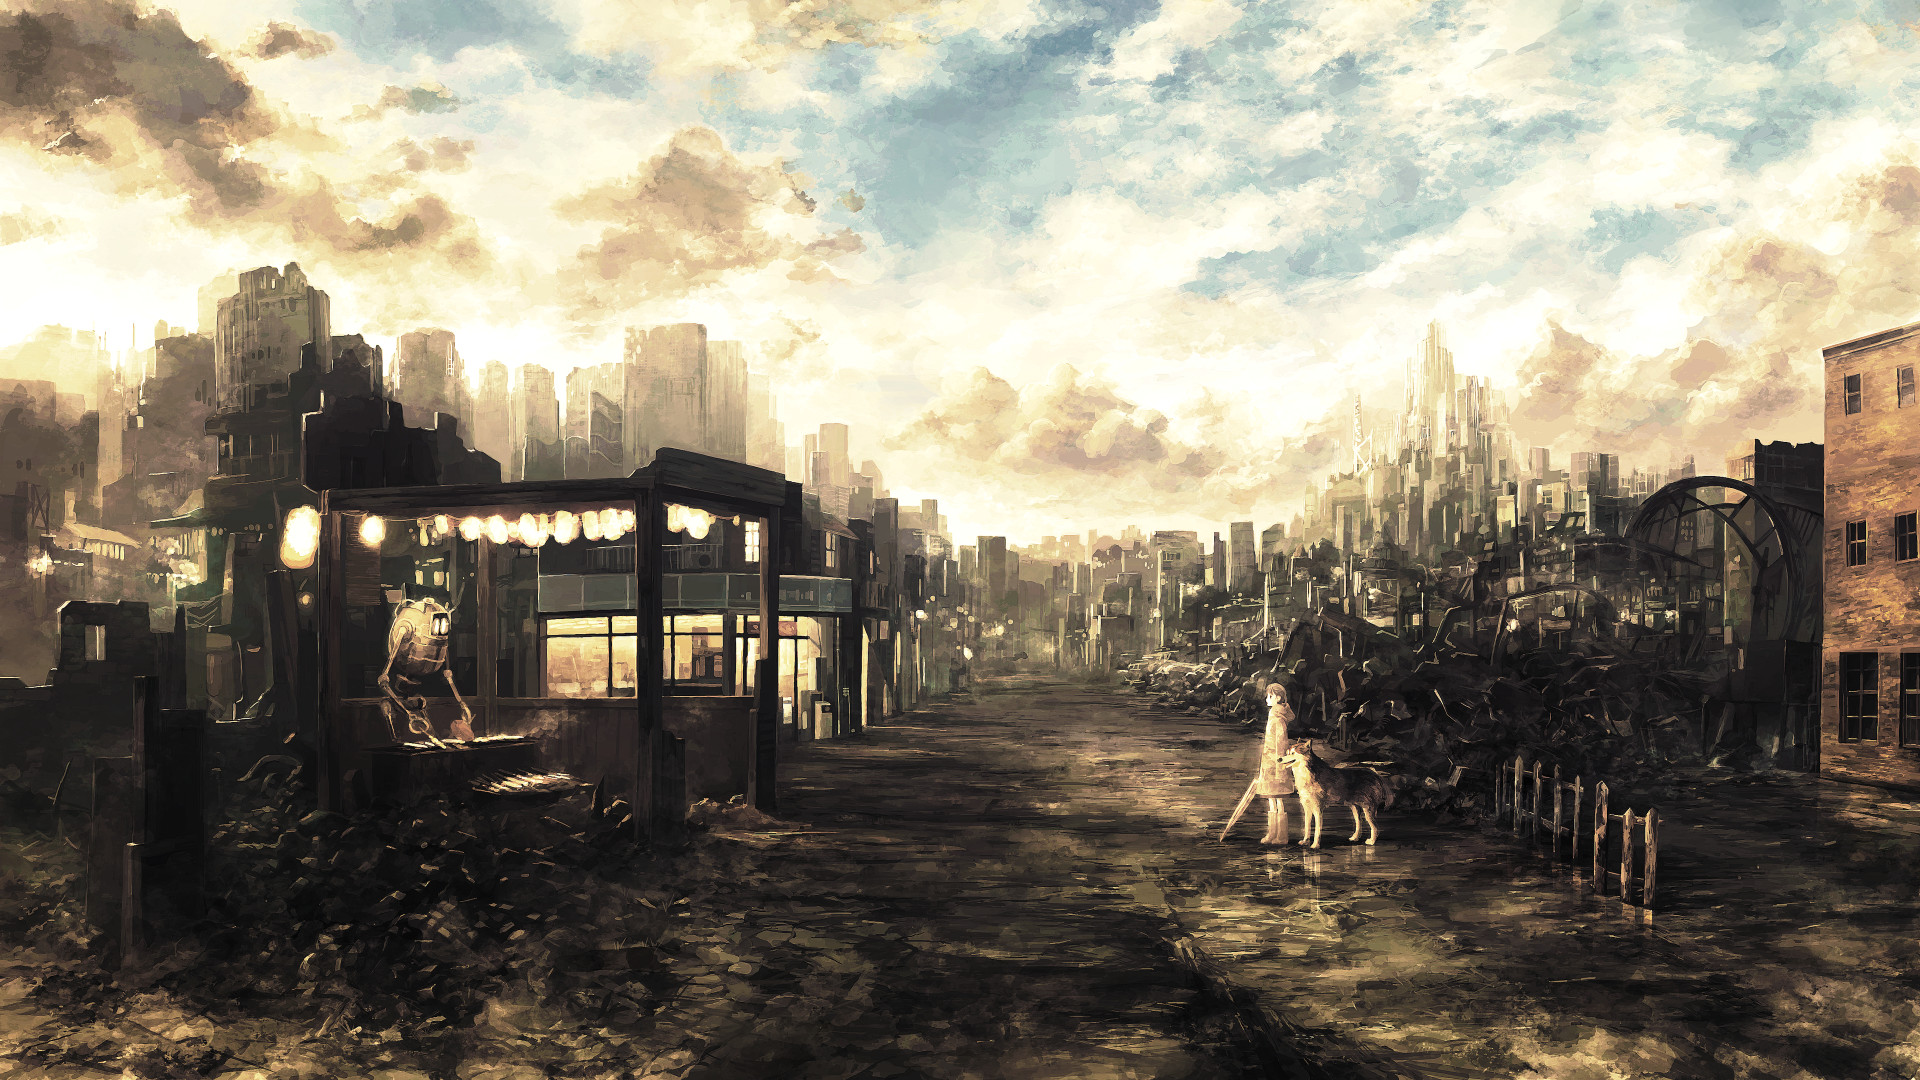 Wallpaper : anime, cityscape, apocalyptic, Tokyo, shibuya station, Shibuya,  destruction, nature, Japan 2731x1654 - Punisher365 - 1771701 - HD Wallpapers  - WallHere